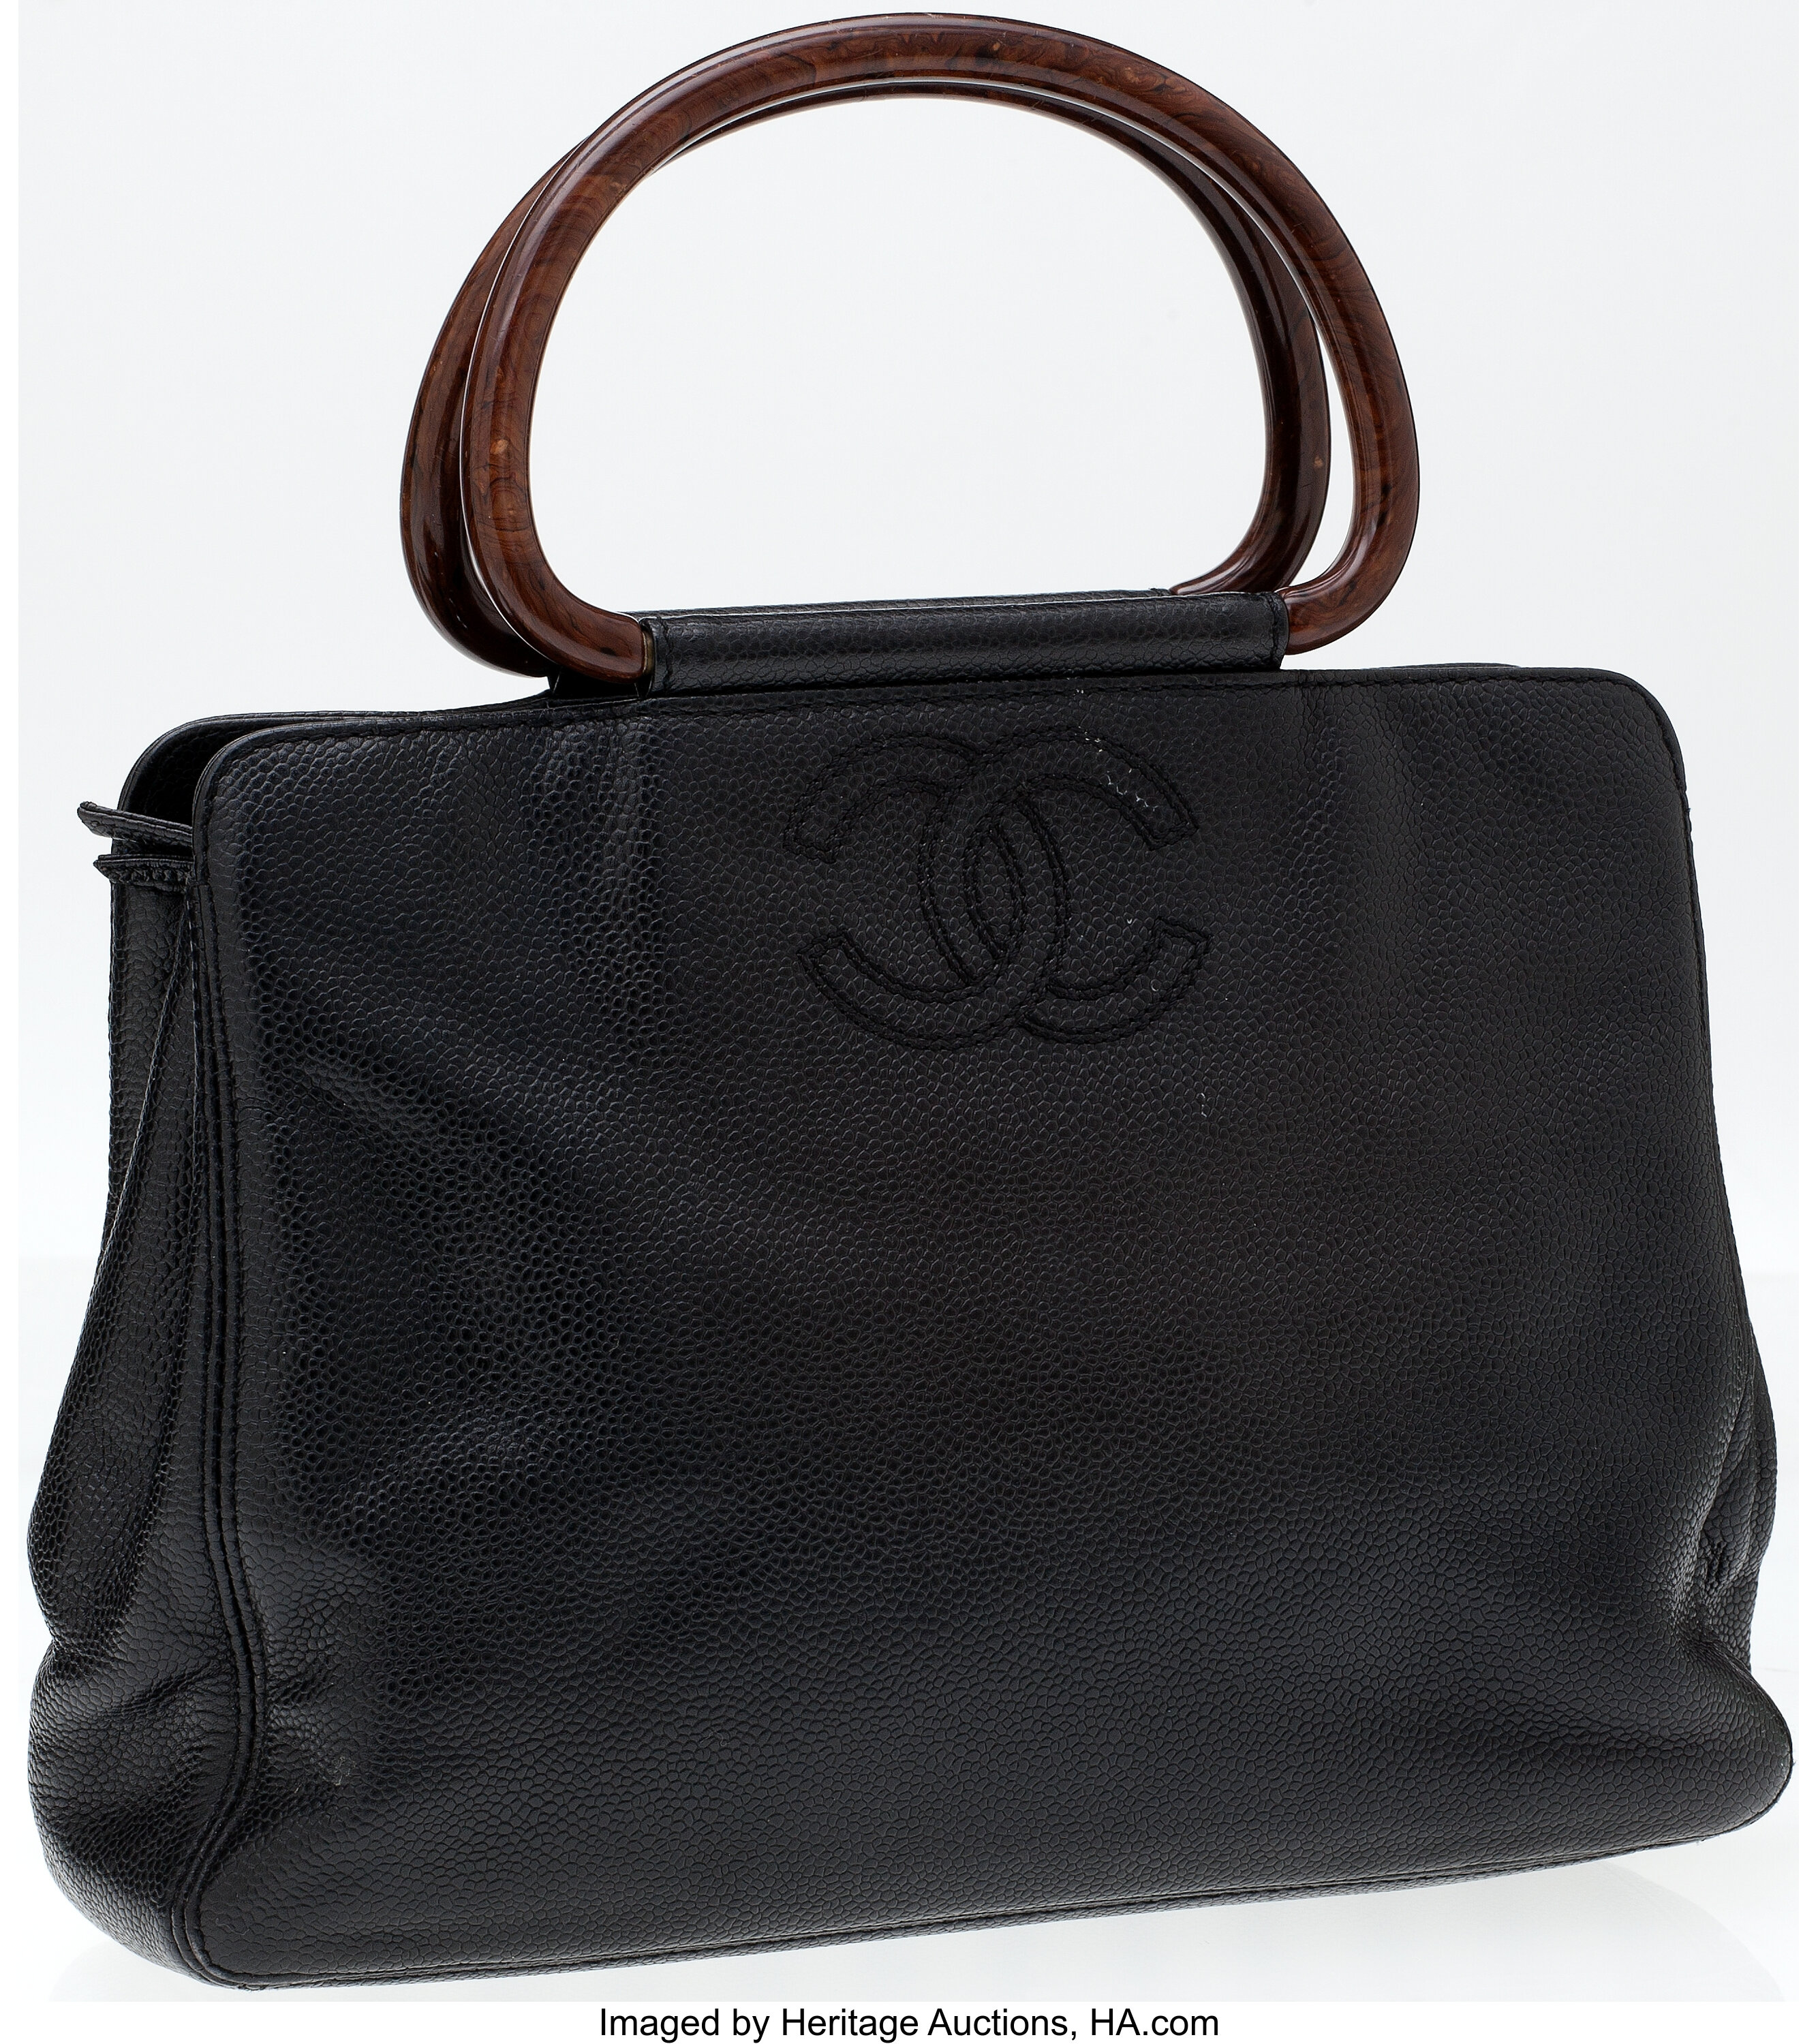 Vintage Chanel Wooden Handle Bag Auction